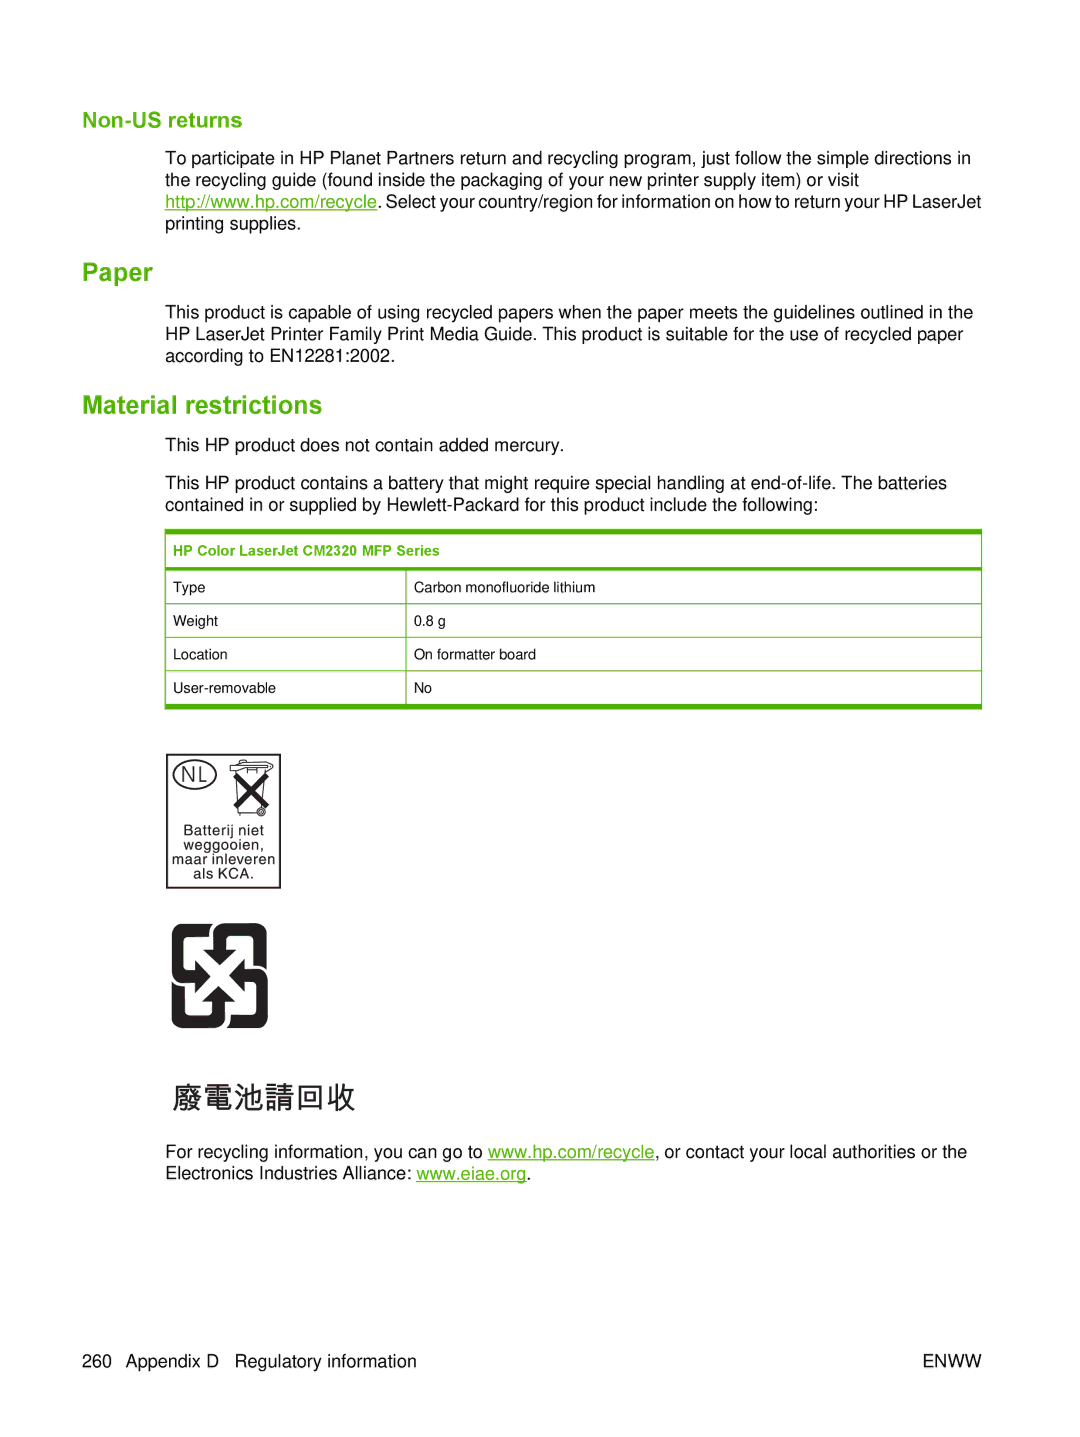 HP manual Paper, Material restrictions, Non-US returns, HP Color LaserJet CM2320 MFP Series 